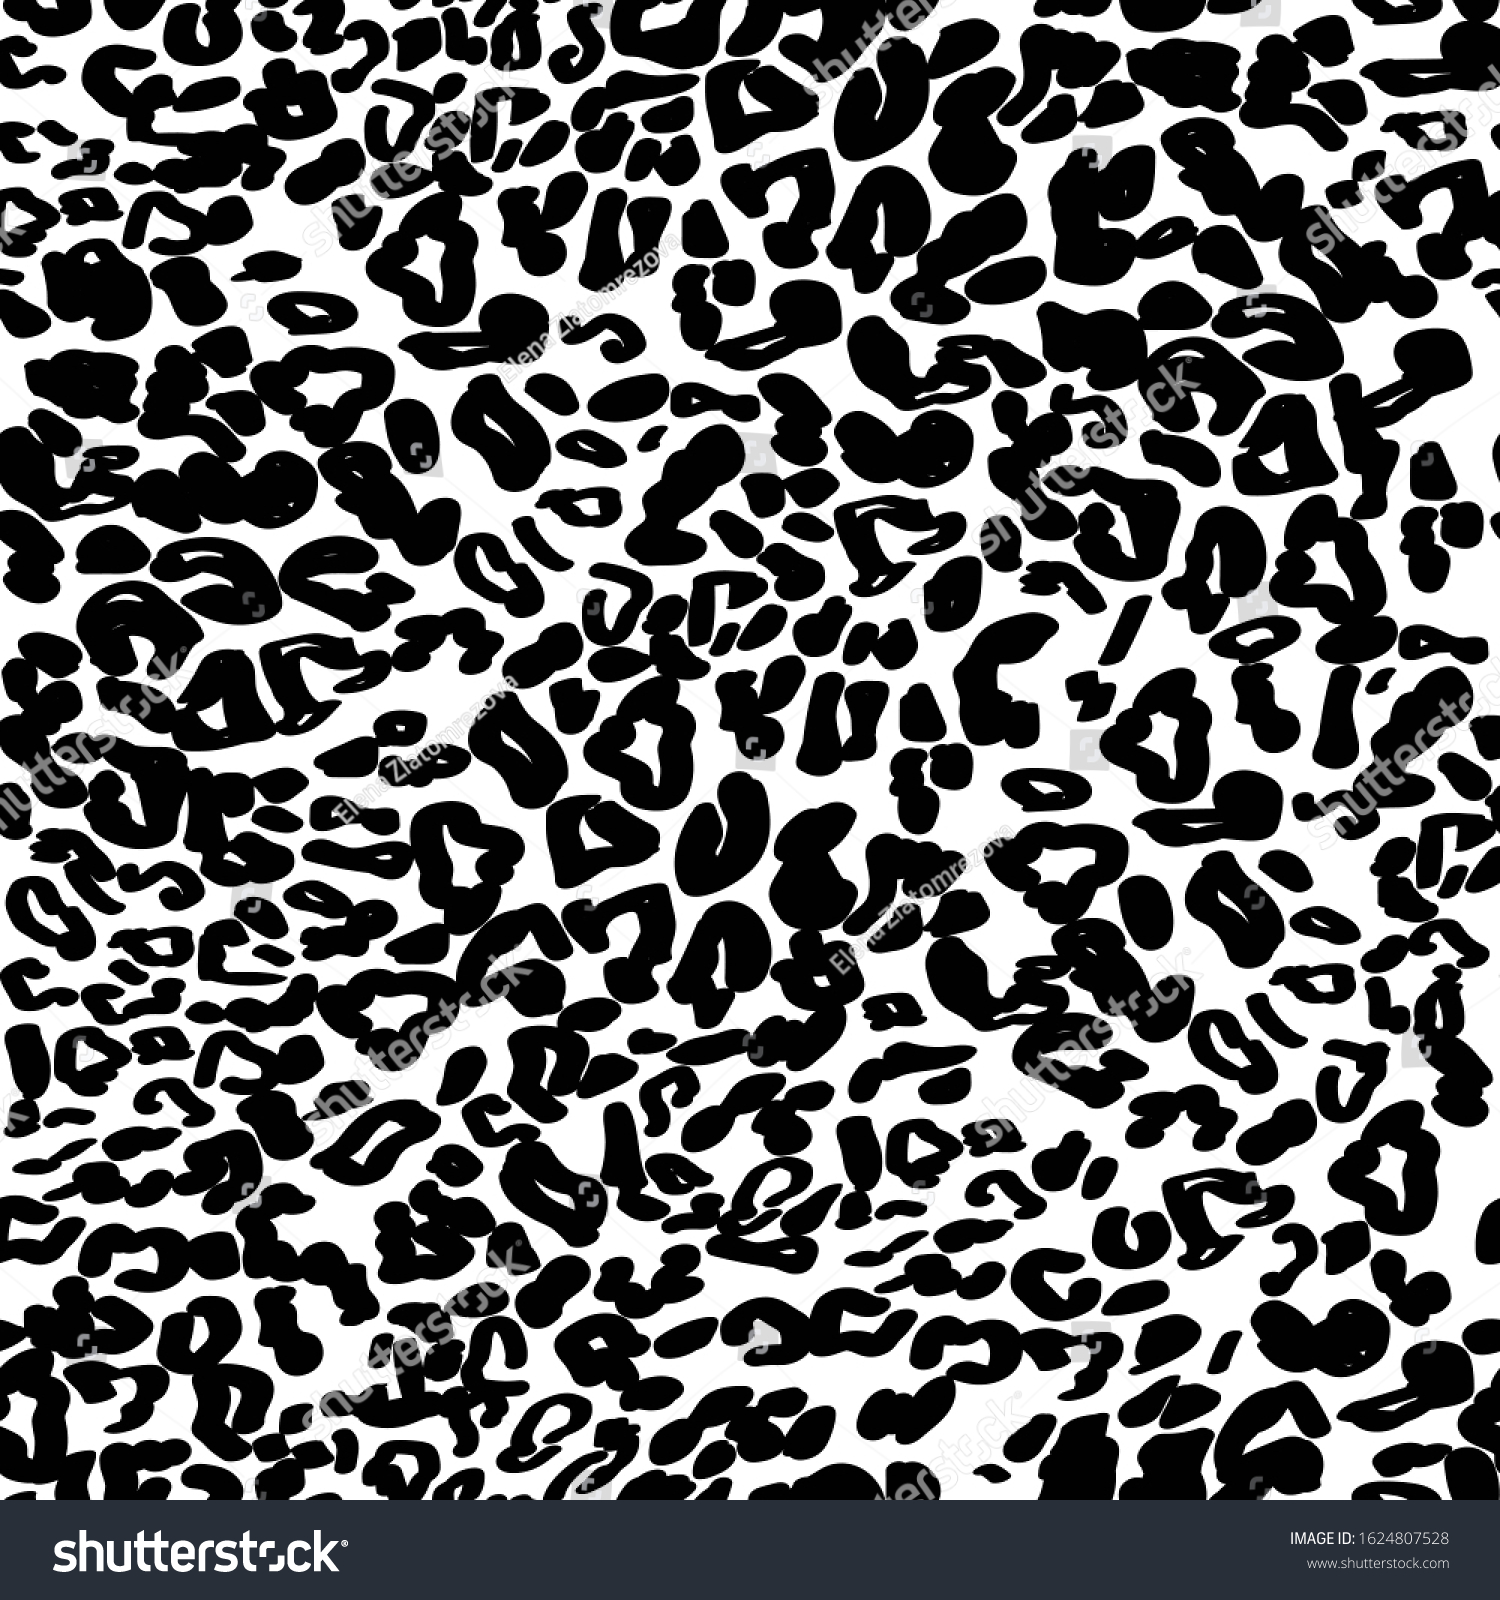 813 Full seamless leopard Images, Stock Photos & Vectors | Shutterstock